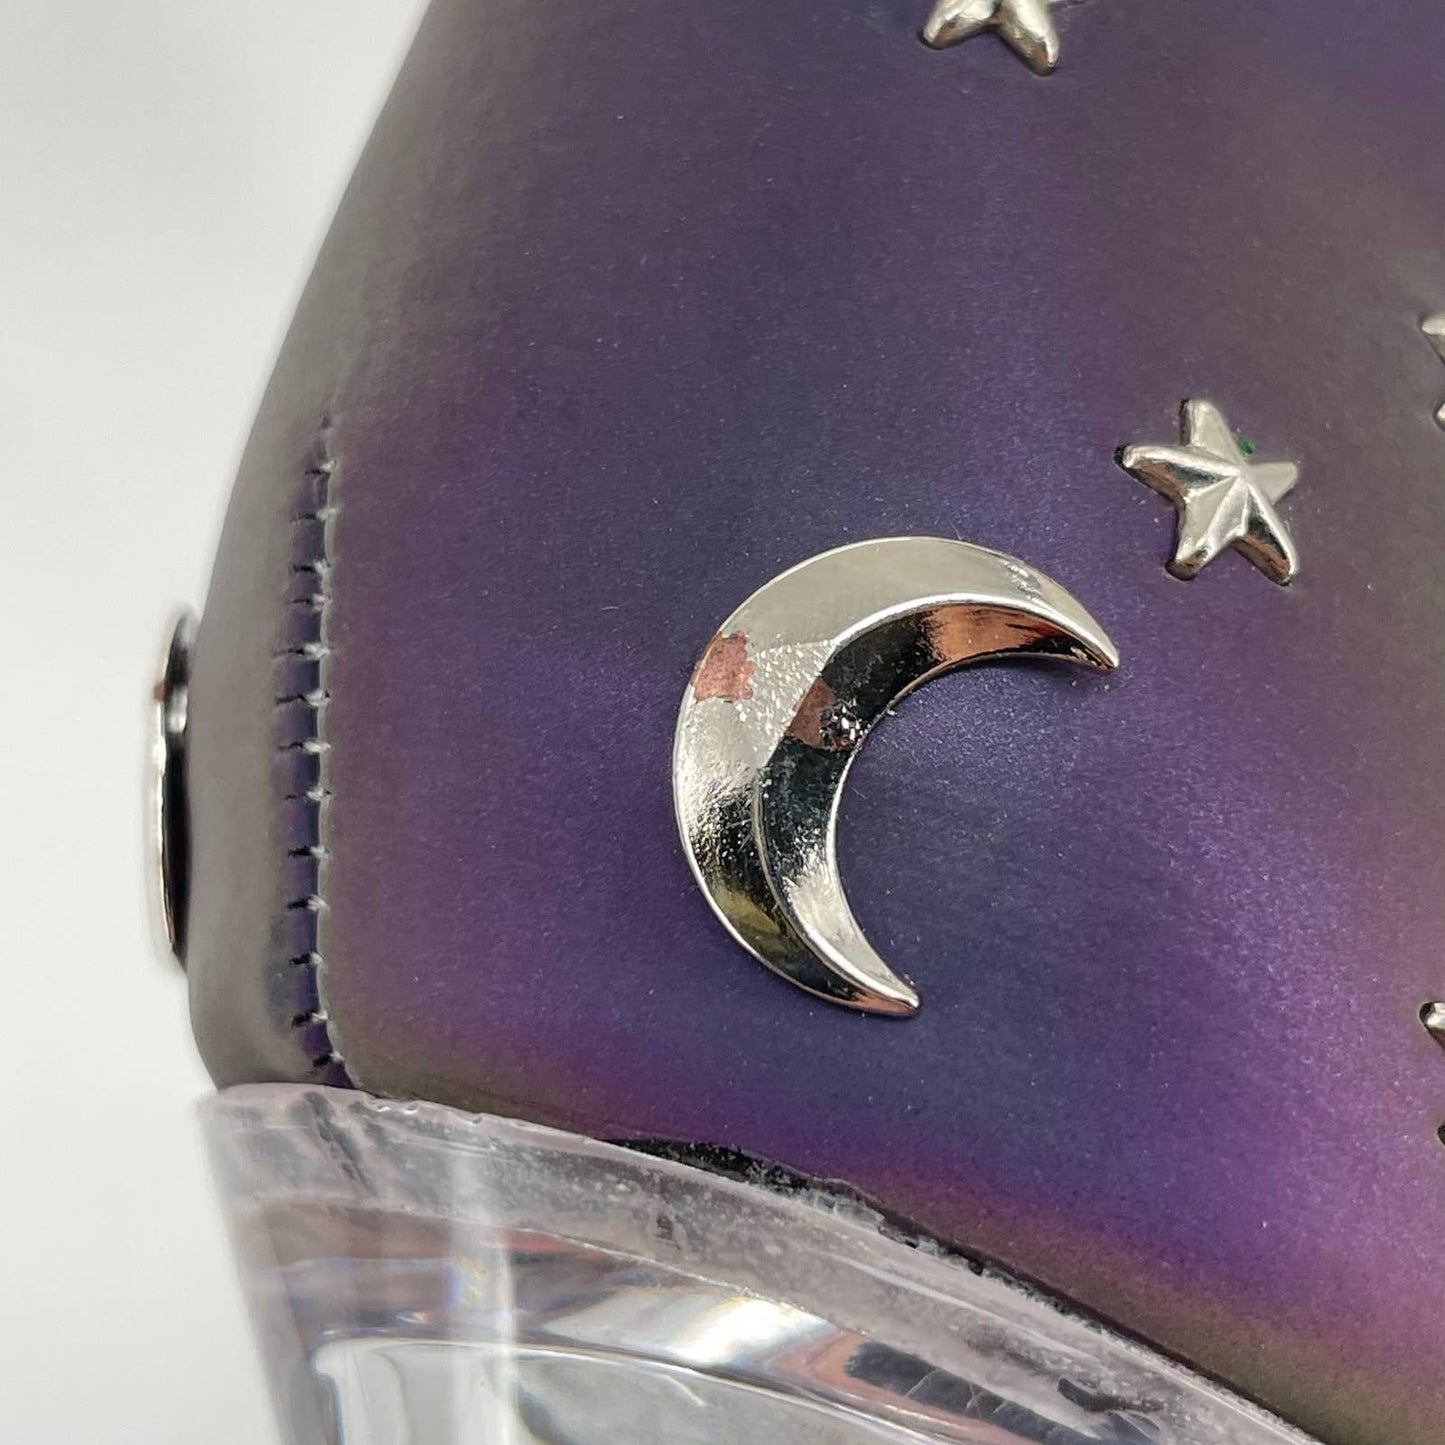 Exotic Cosmic Reflective Heels Celestial Moon Stars Clear Platform Dancer Boots Size 7